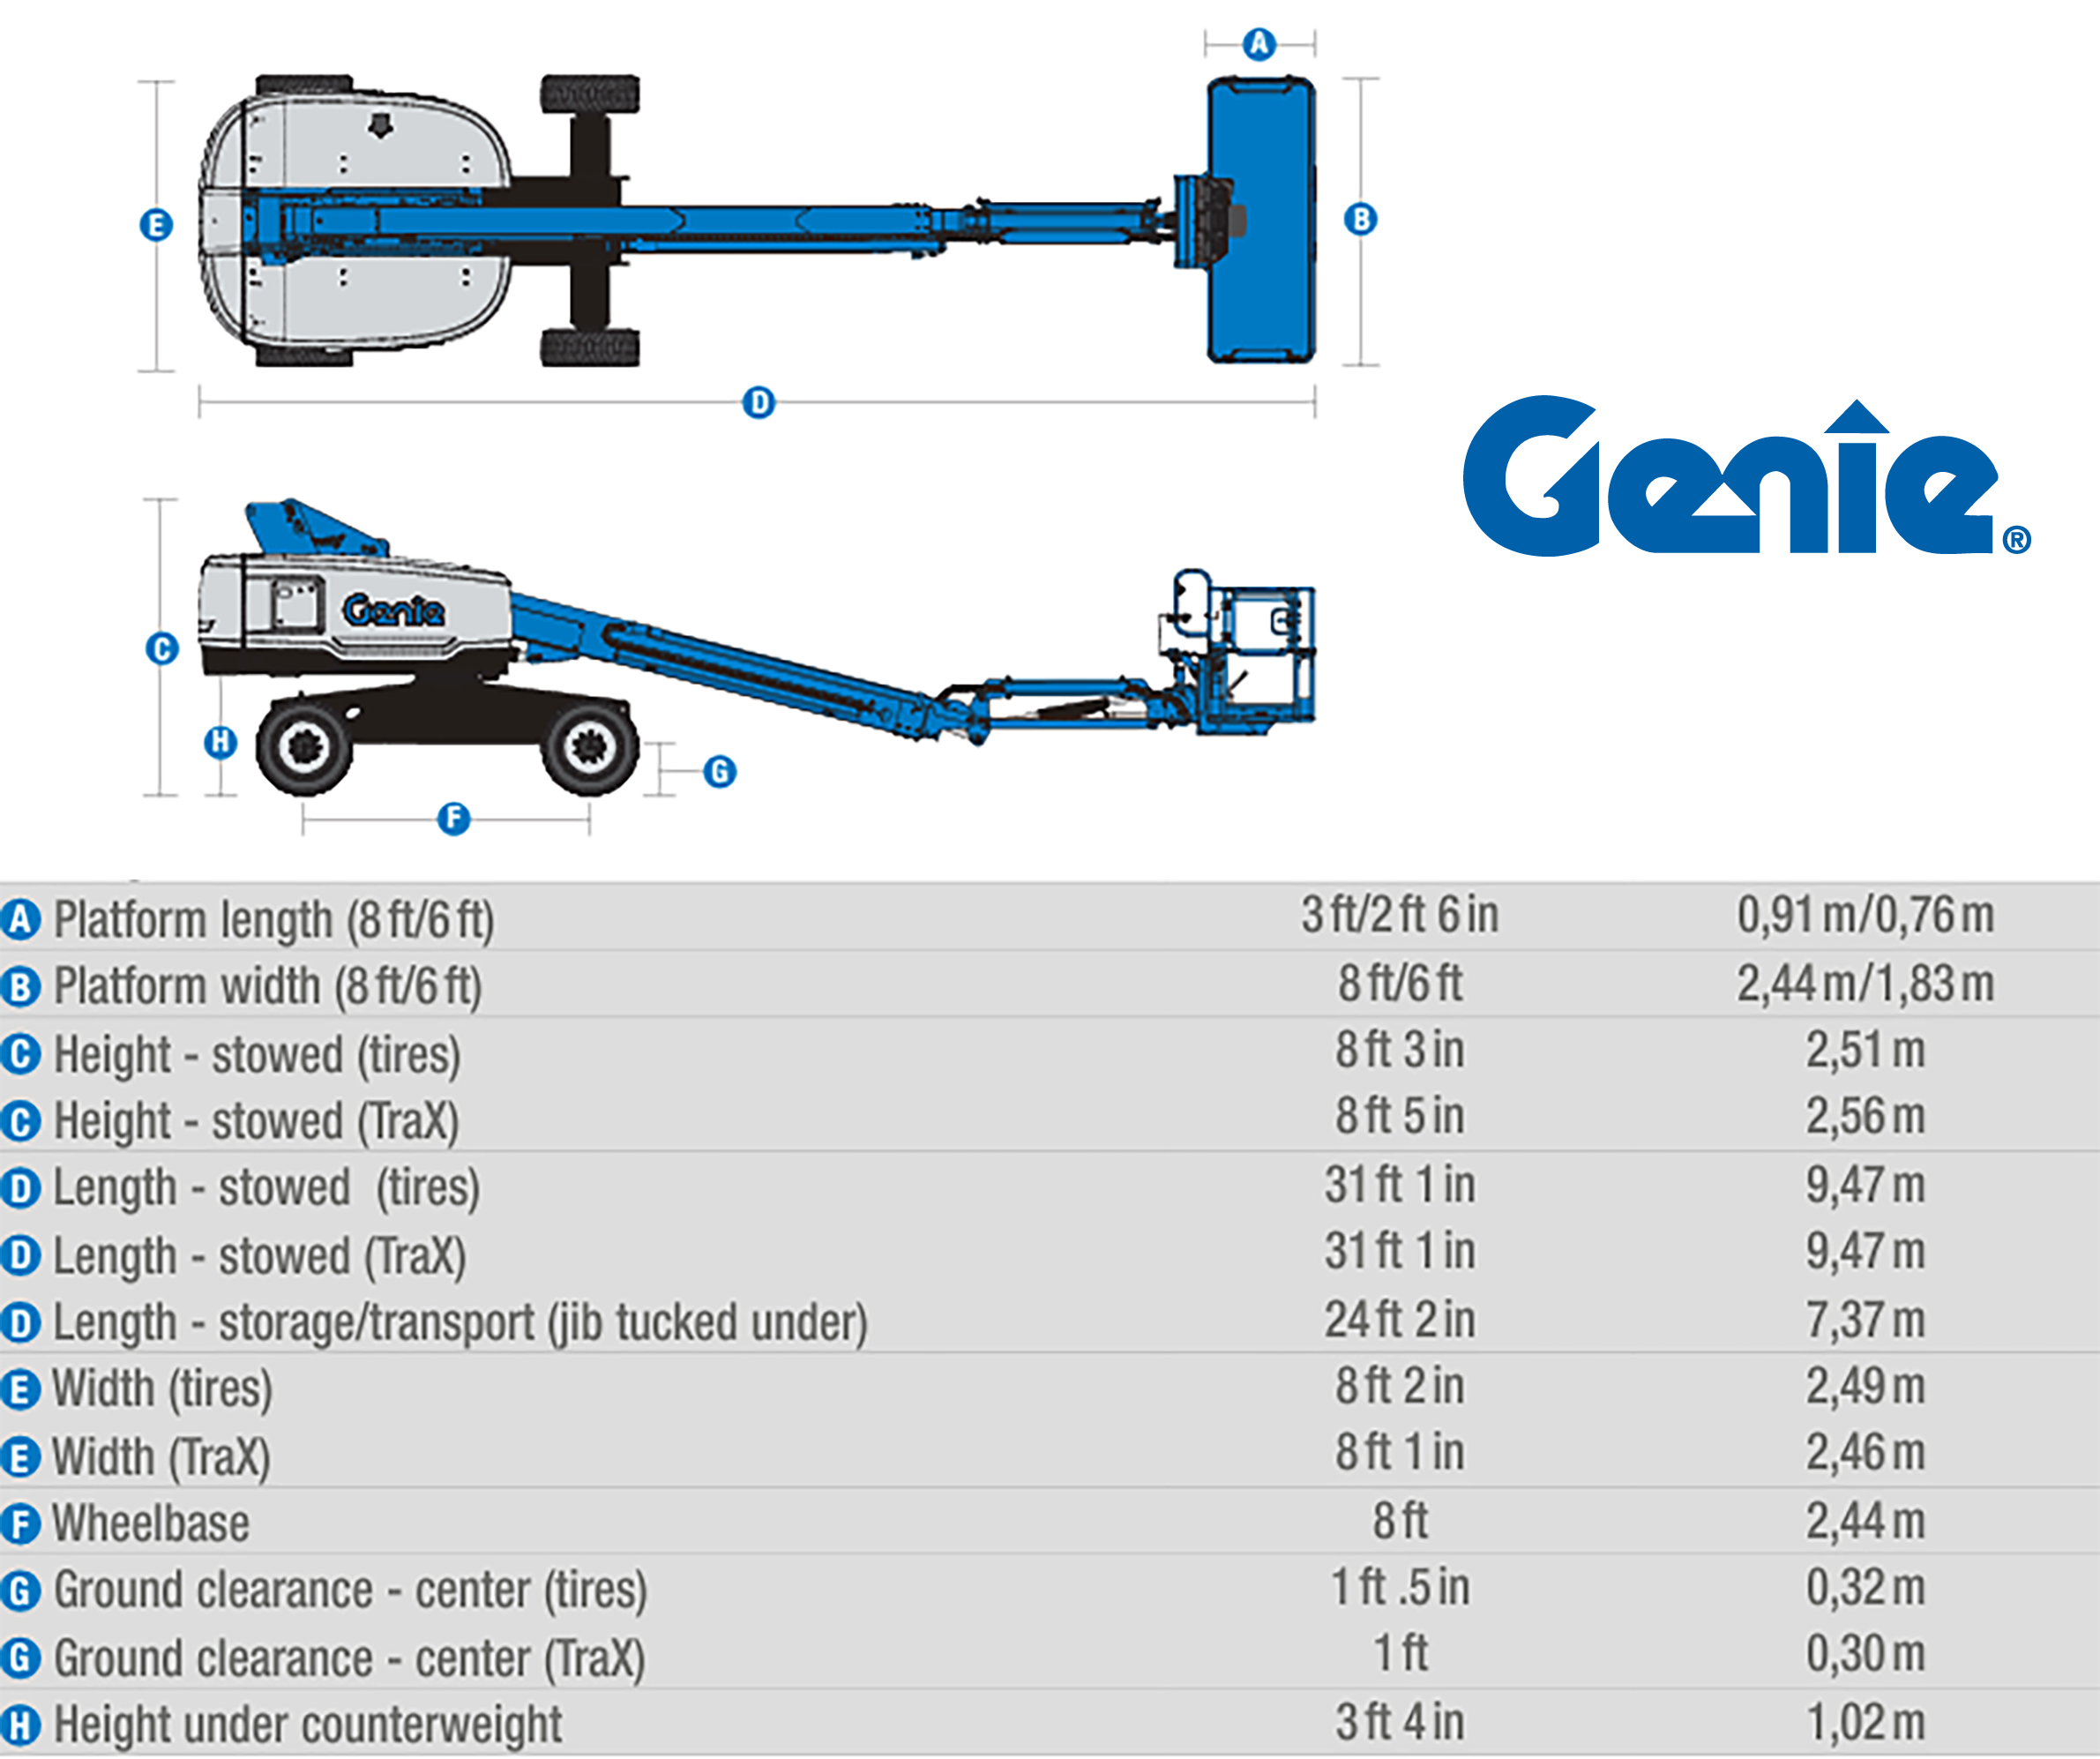 Genie S-45 Range Of Motion Diagram 4